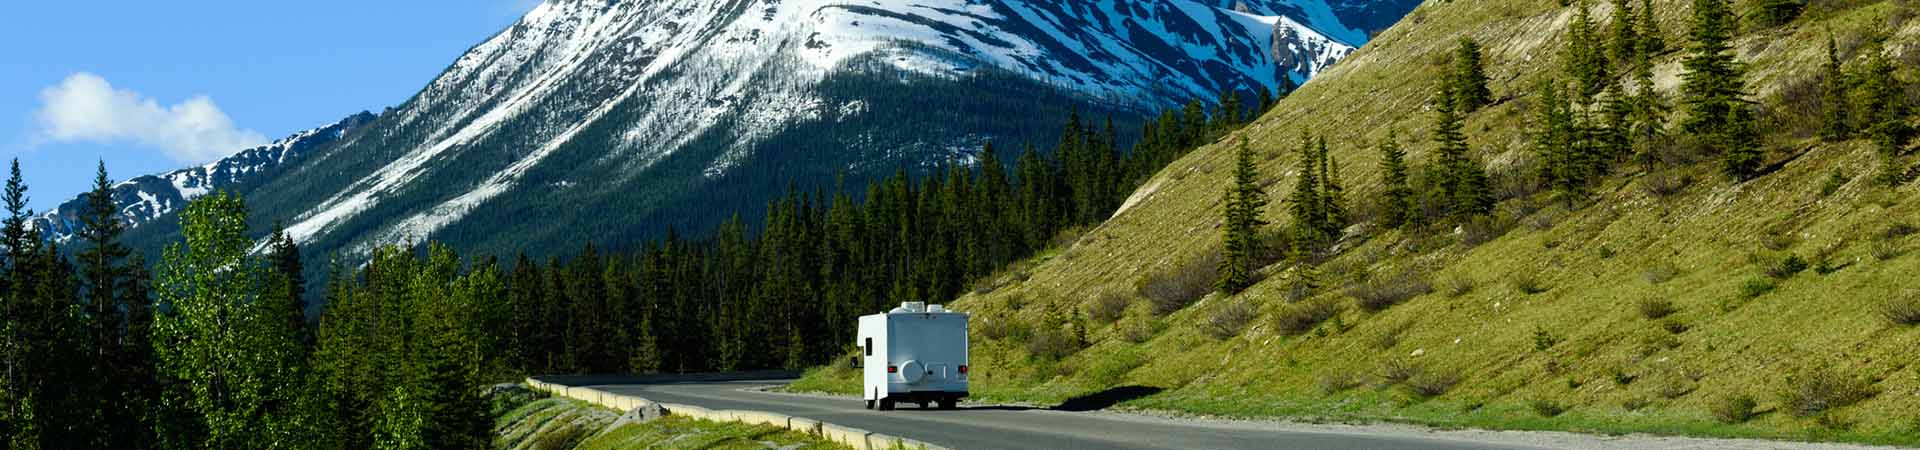 Guidare un camper – Un autocaravan attraversa un paesaggio di montagna.